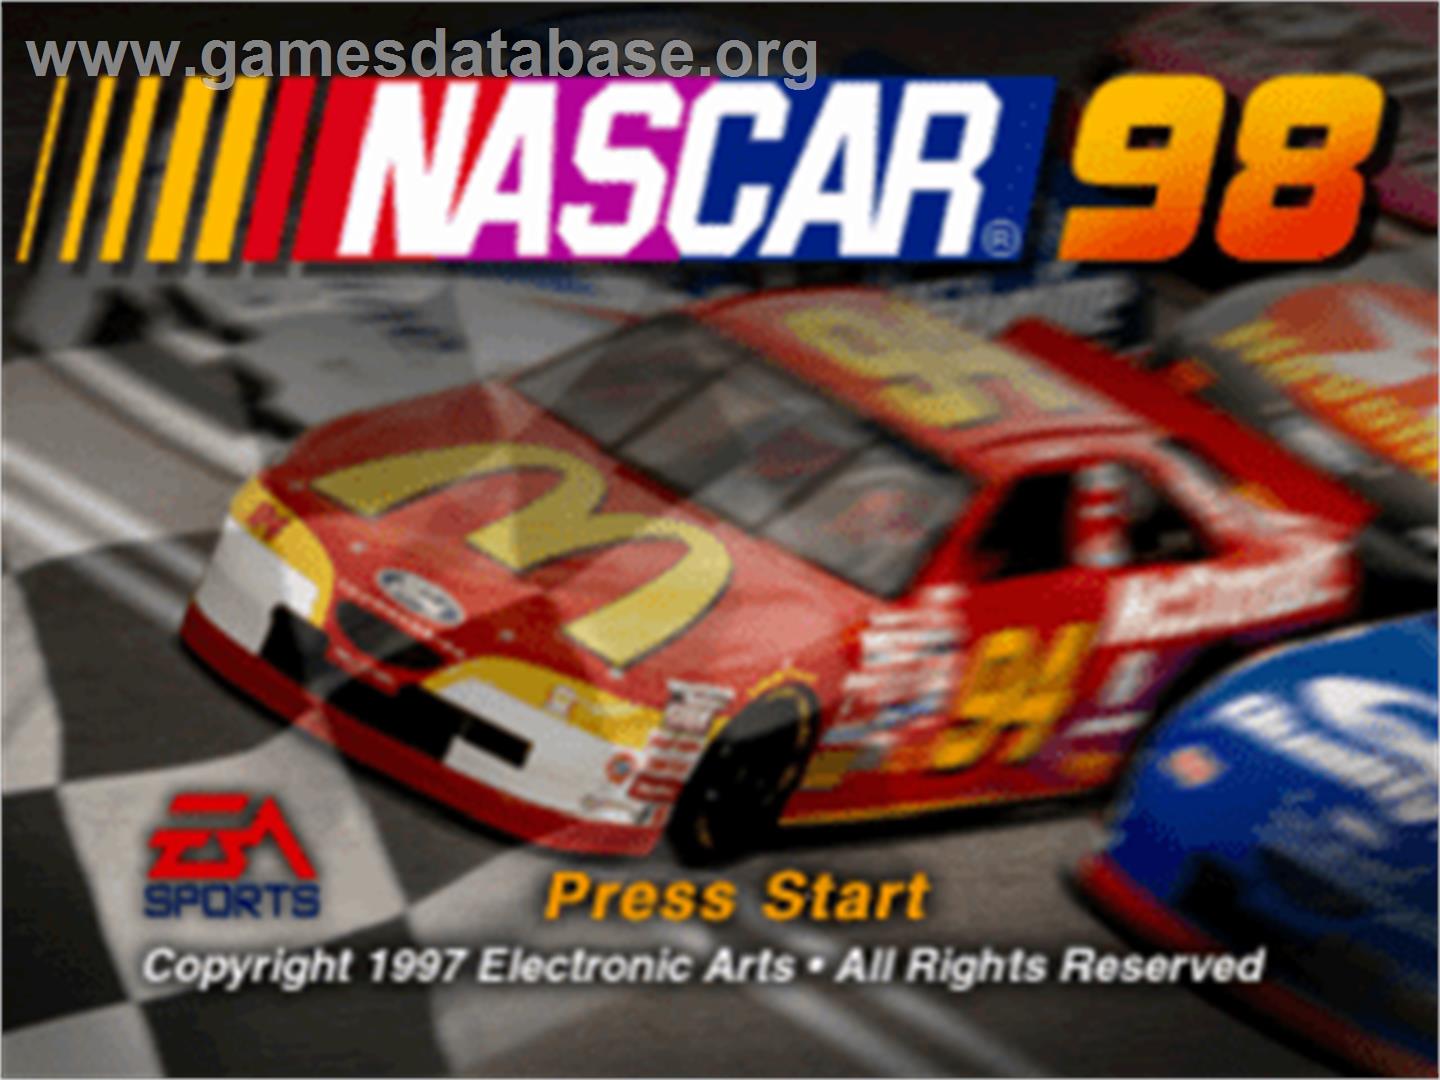 NASCAR 98 - Sony Playstation - Artwork - Title Screen